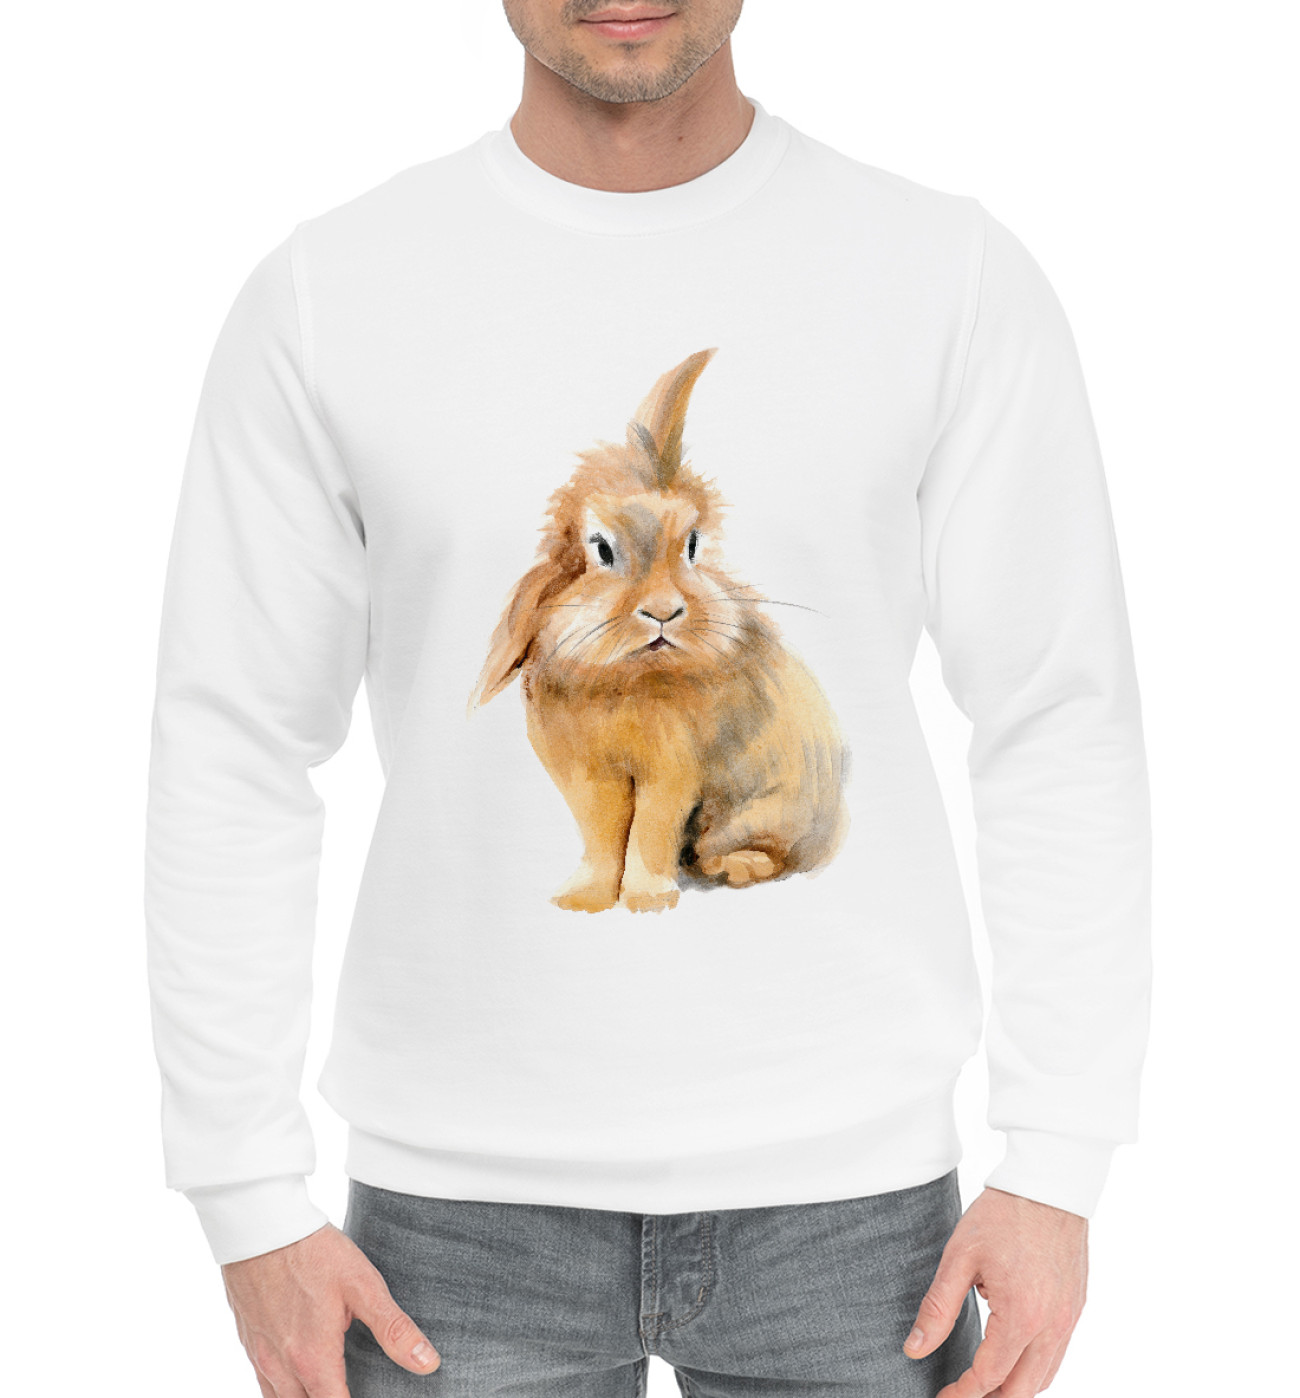 Мужской Хлопковый свитшот Рыжий кролик, артикул: RAB-231856-hsw-2